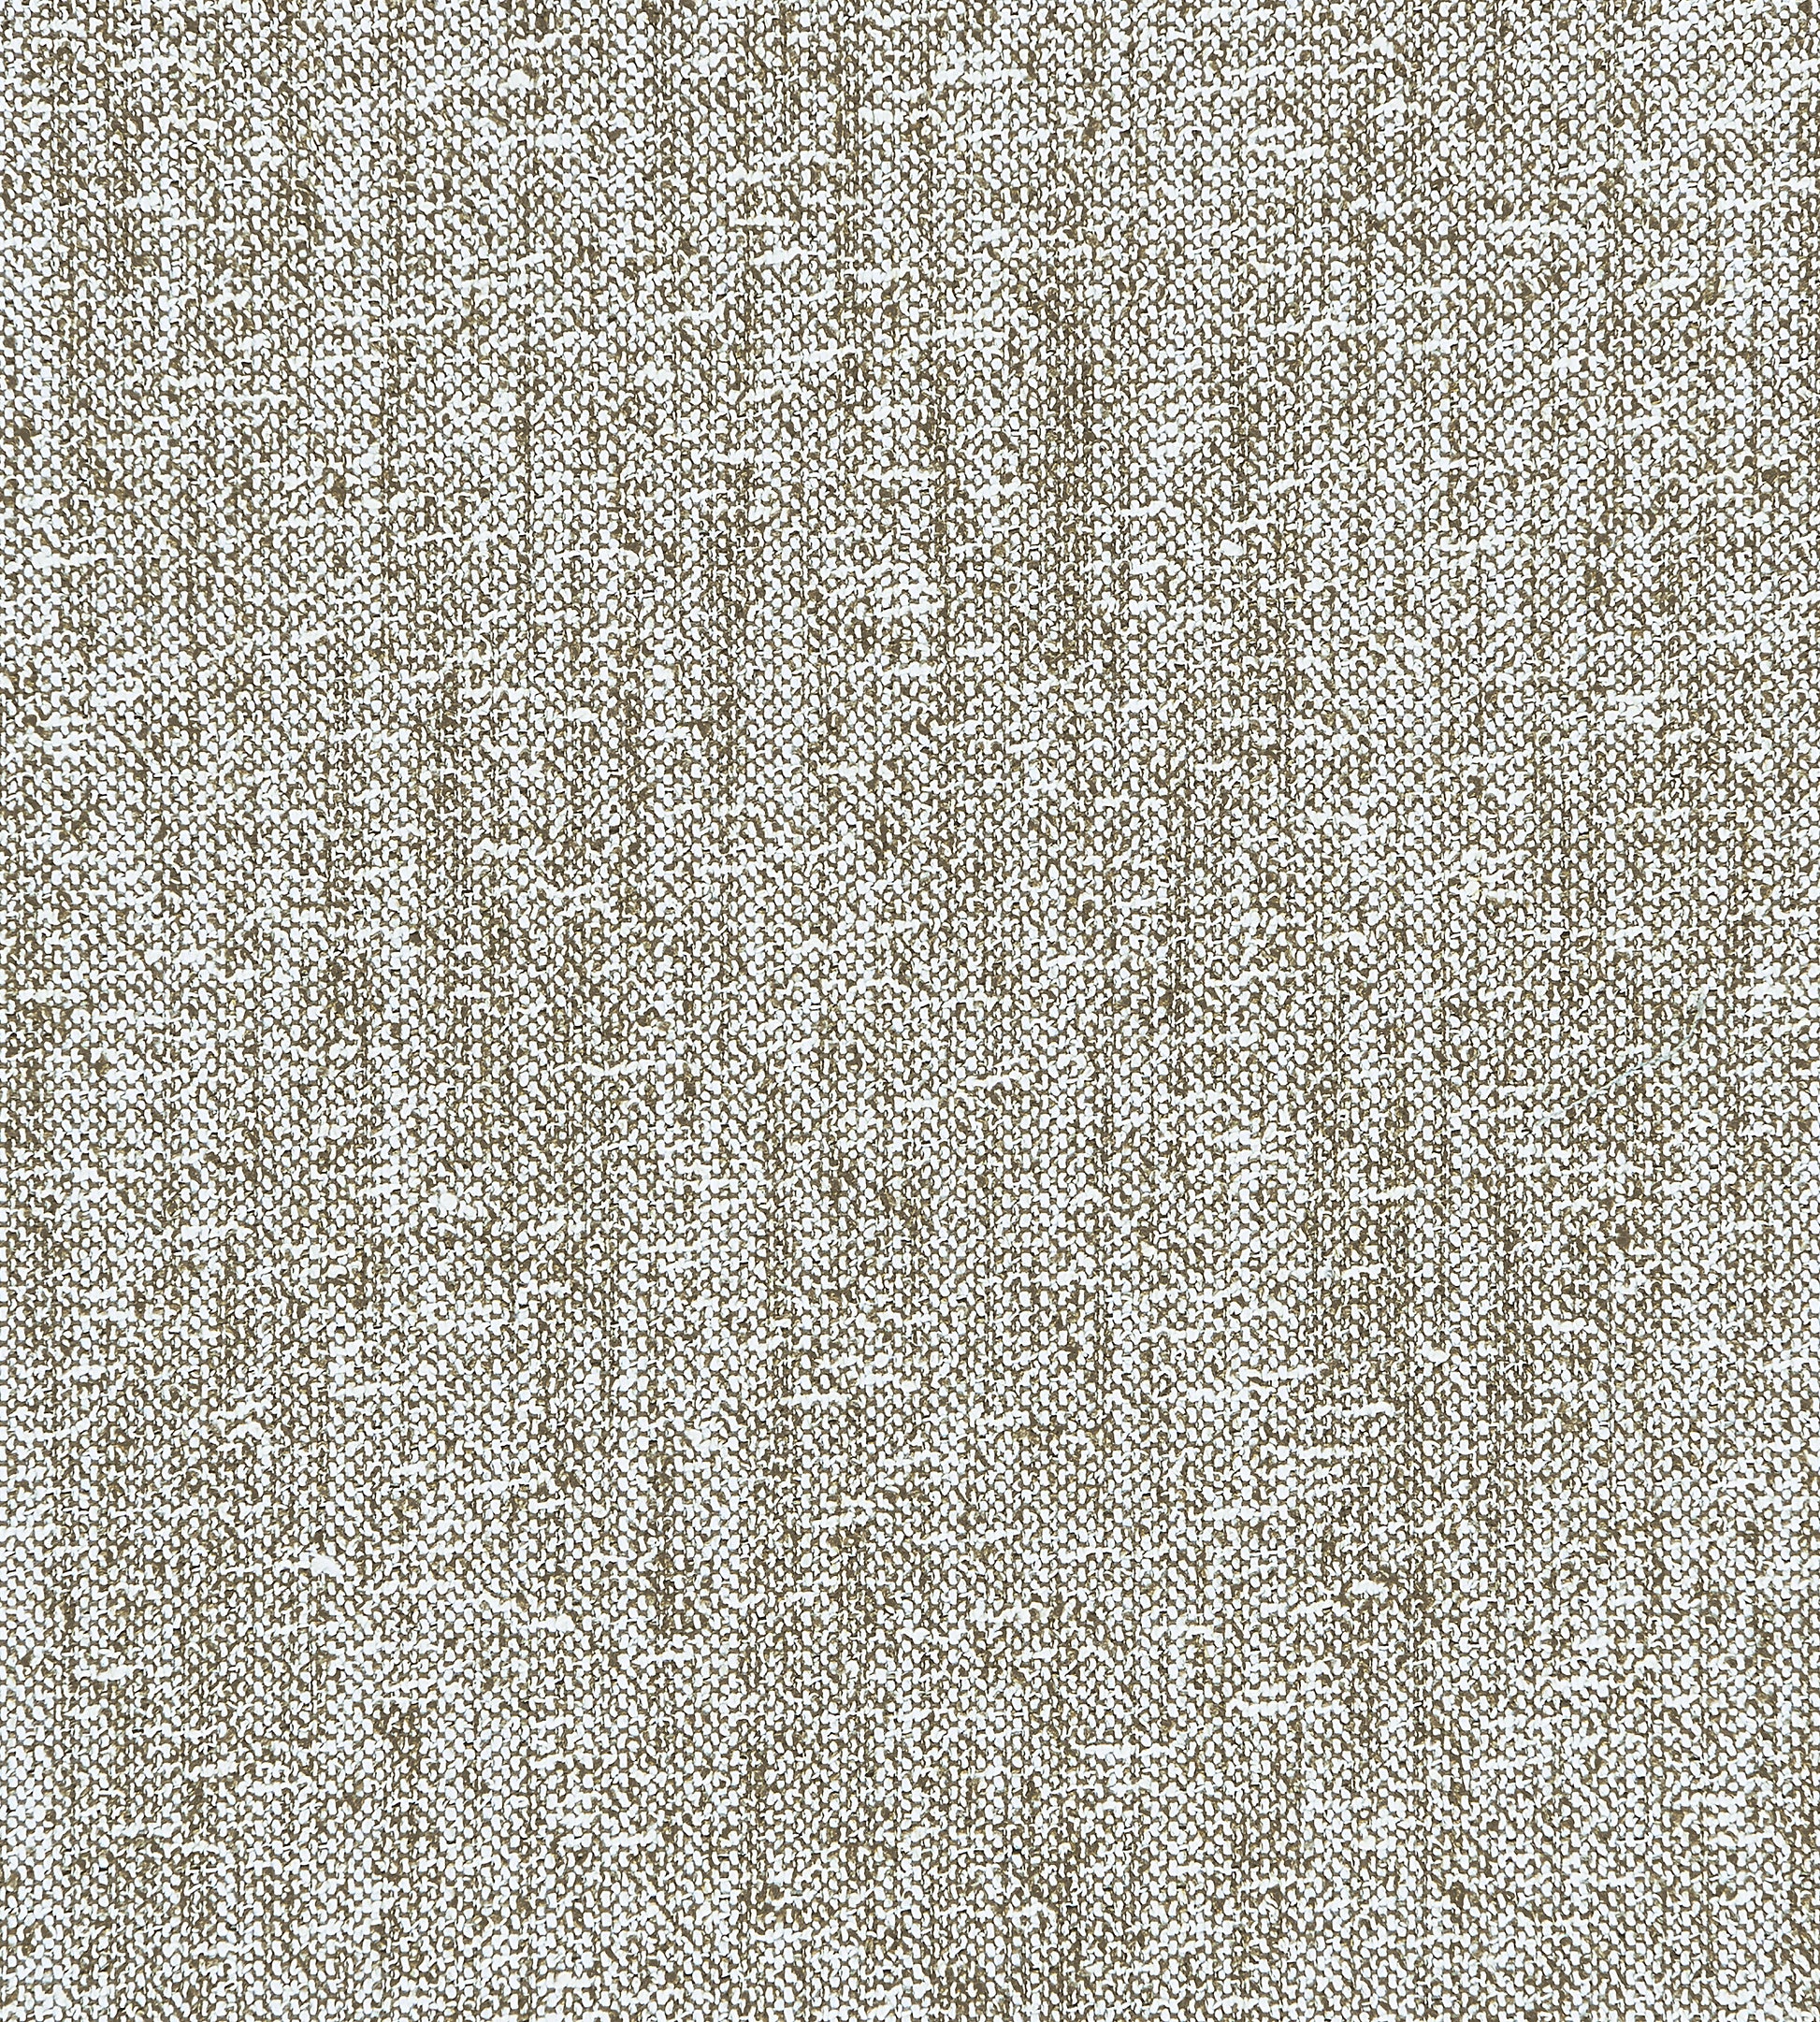 Purchase Scalamandre Fabric Pattern number SC 000527240, Haiku Weave Bark 1